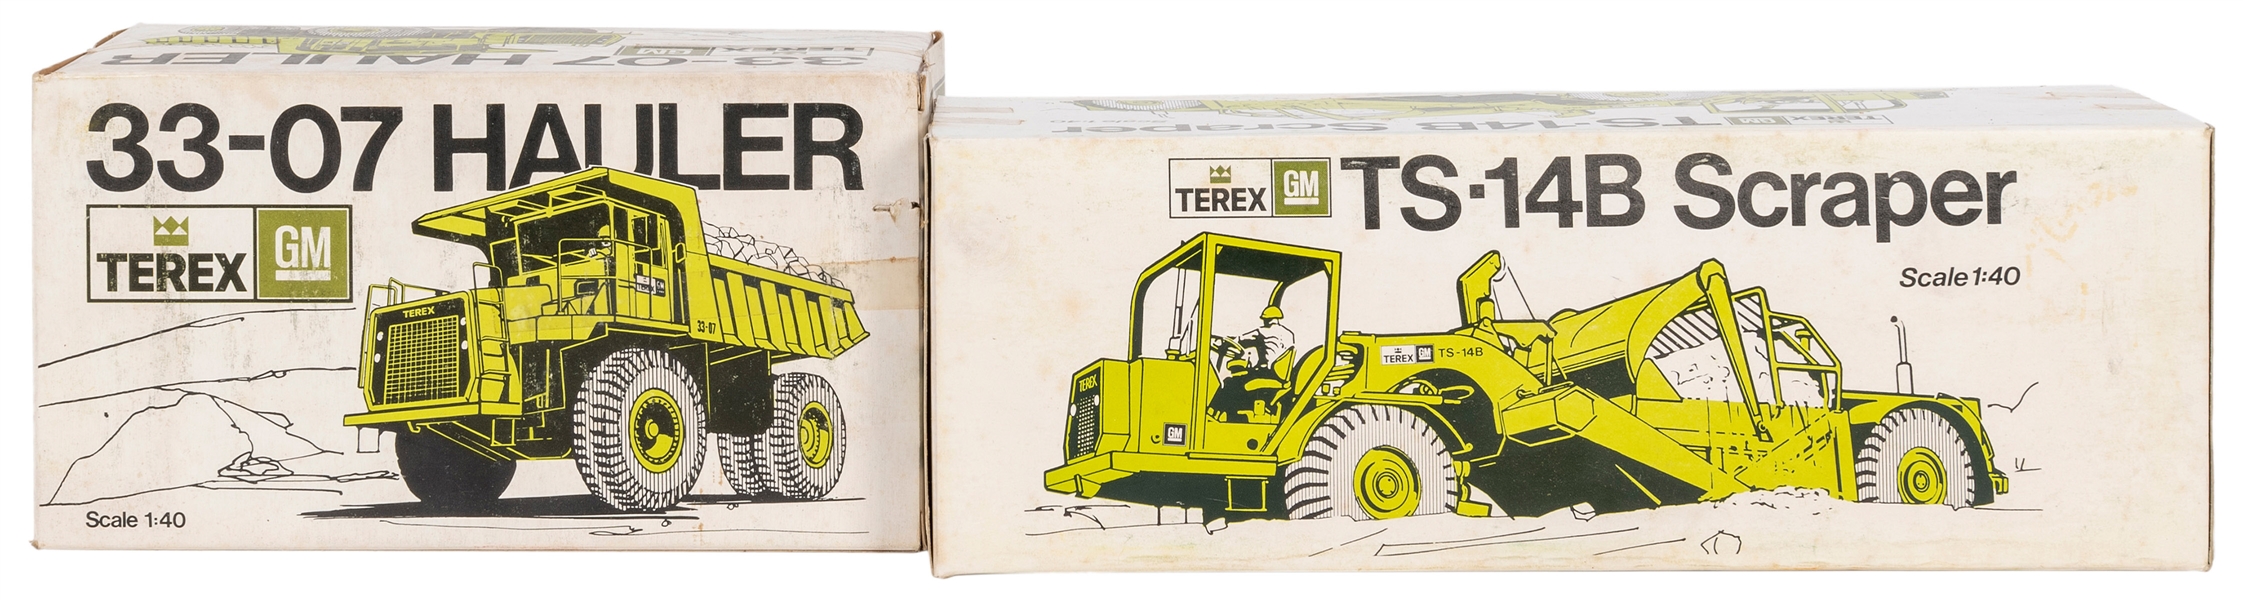  GM Terex Hauler and Scraper Diecast Vehicles in Boxes. Made...